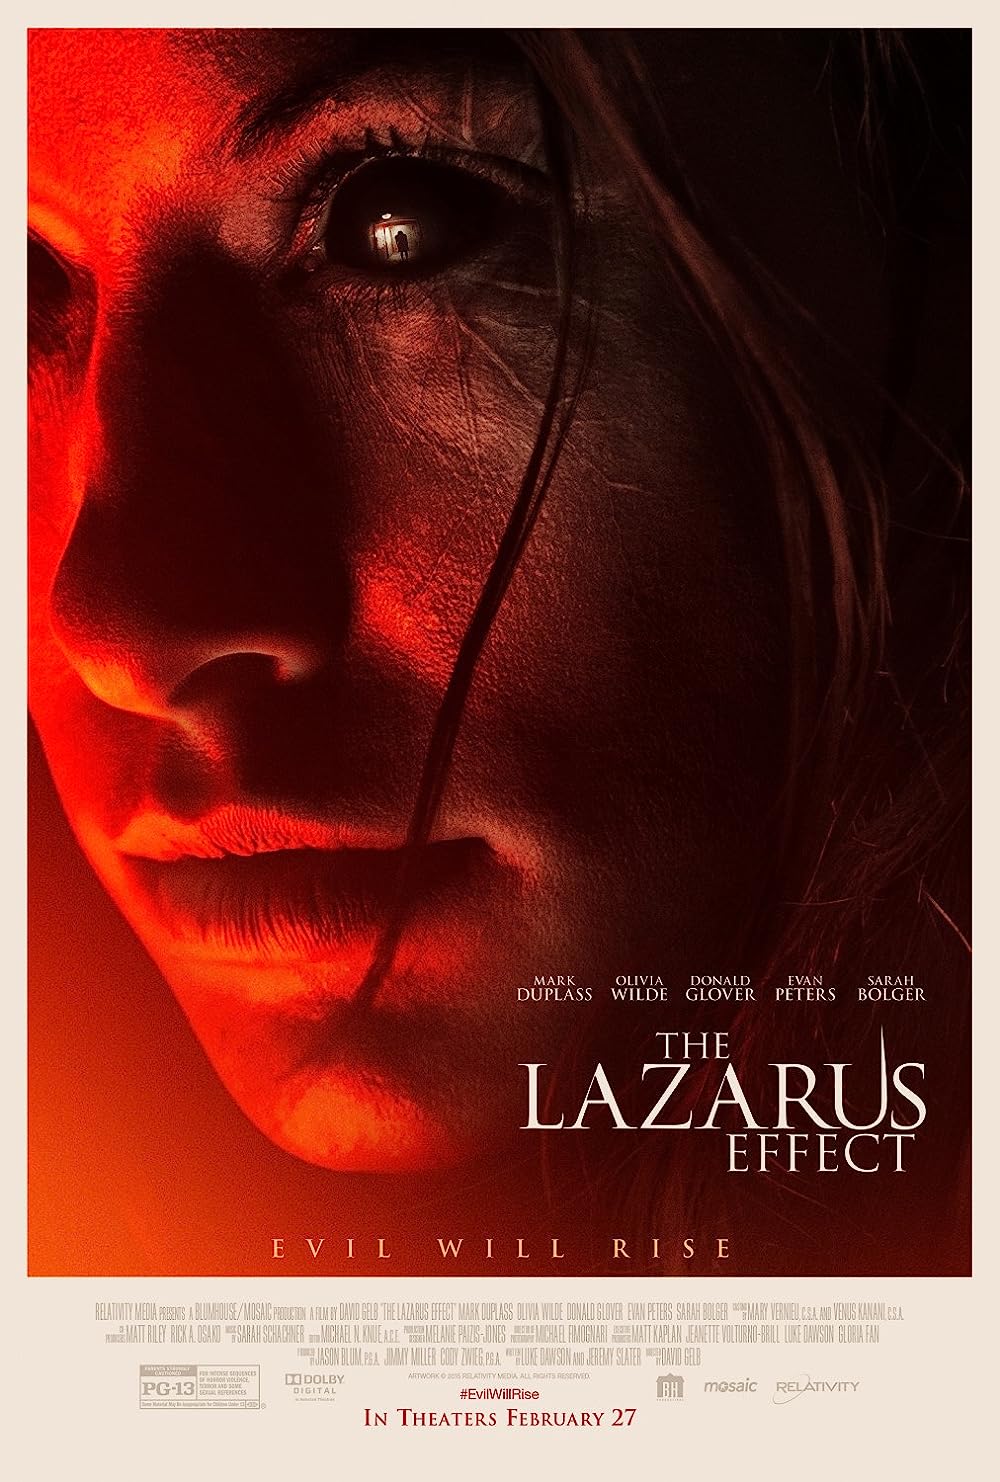 FULL MOVIE: The Lazarus Effect (2015) [Horror]